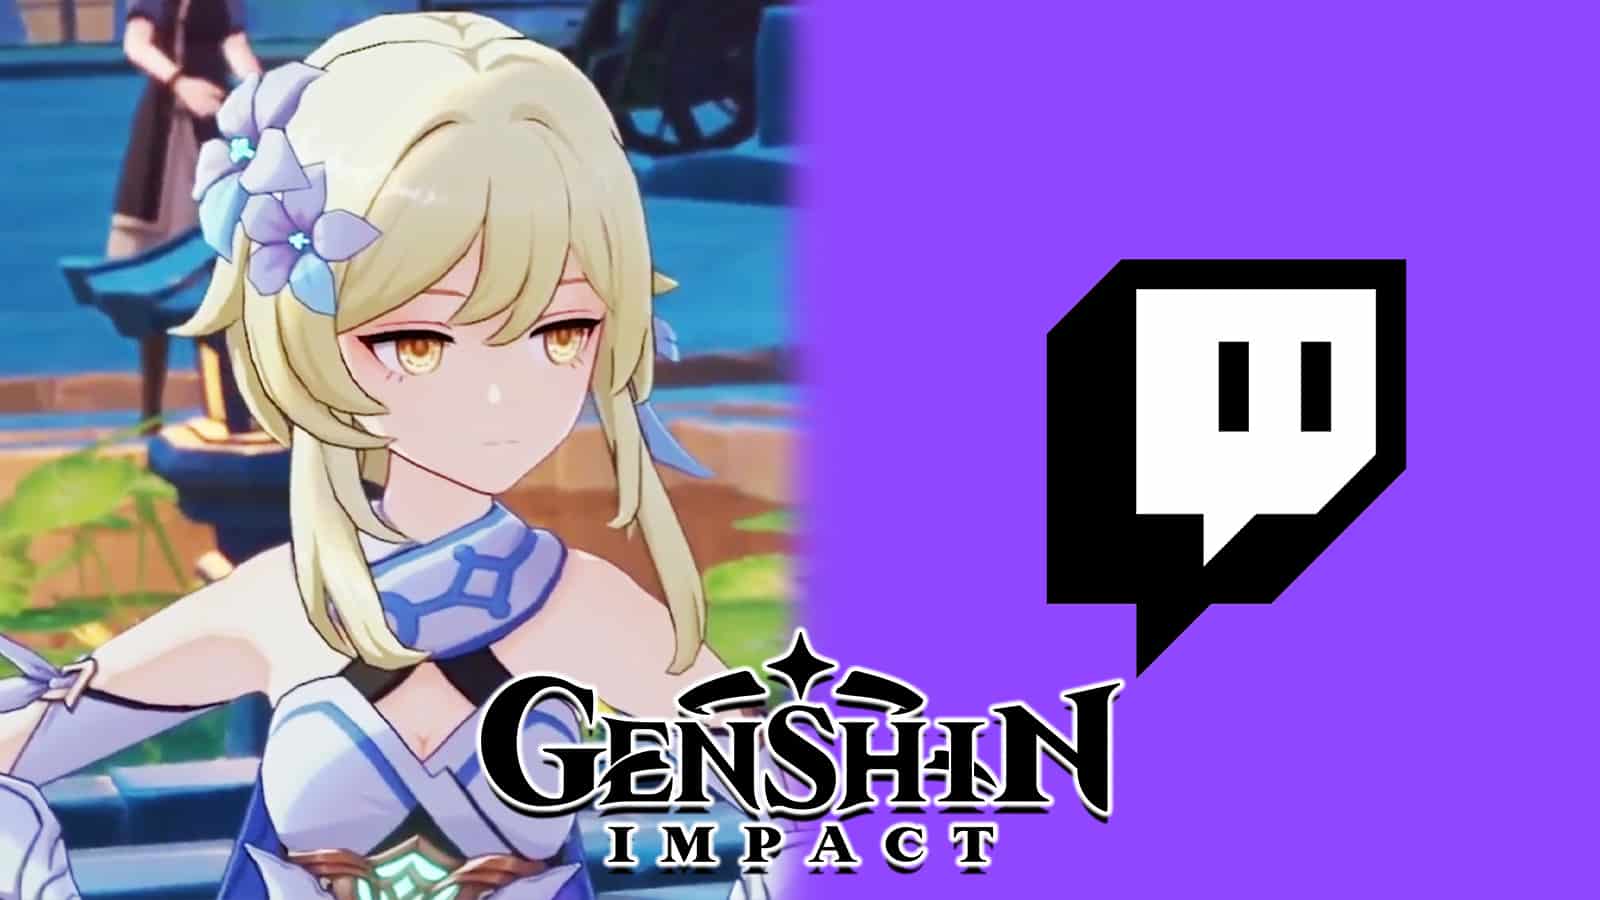 Genshin Impact The Traveler next to Twitch logo screenshot.